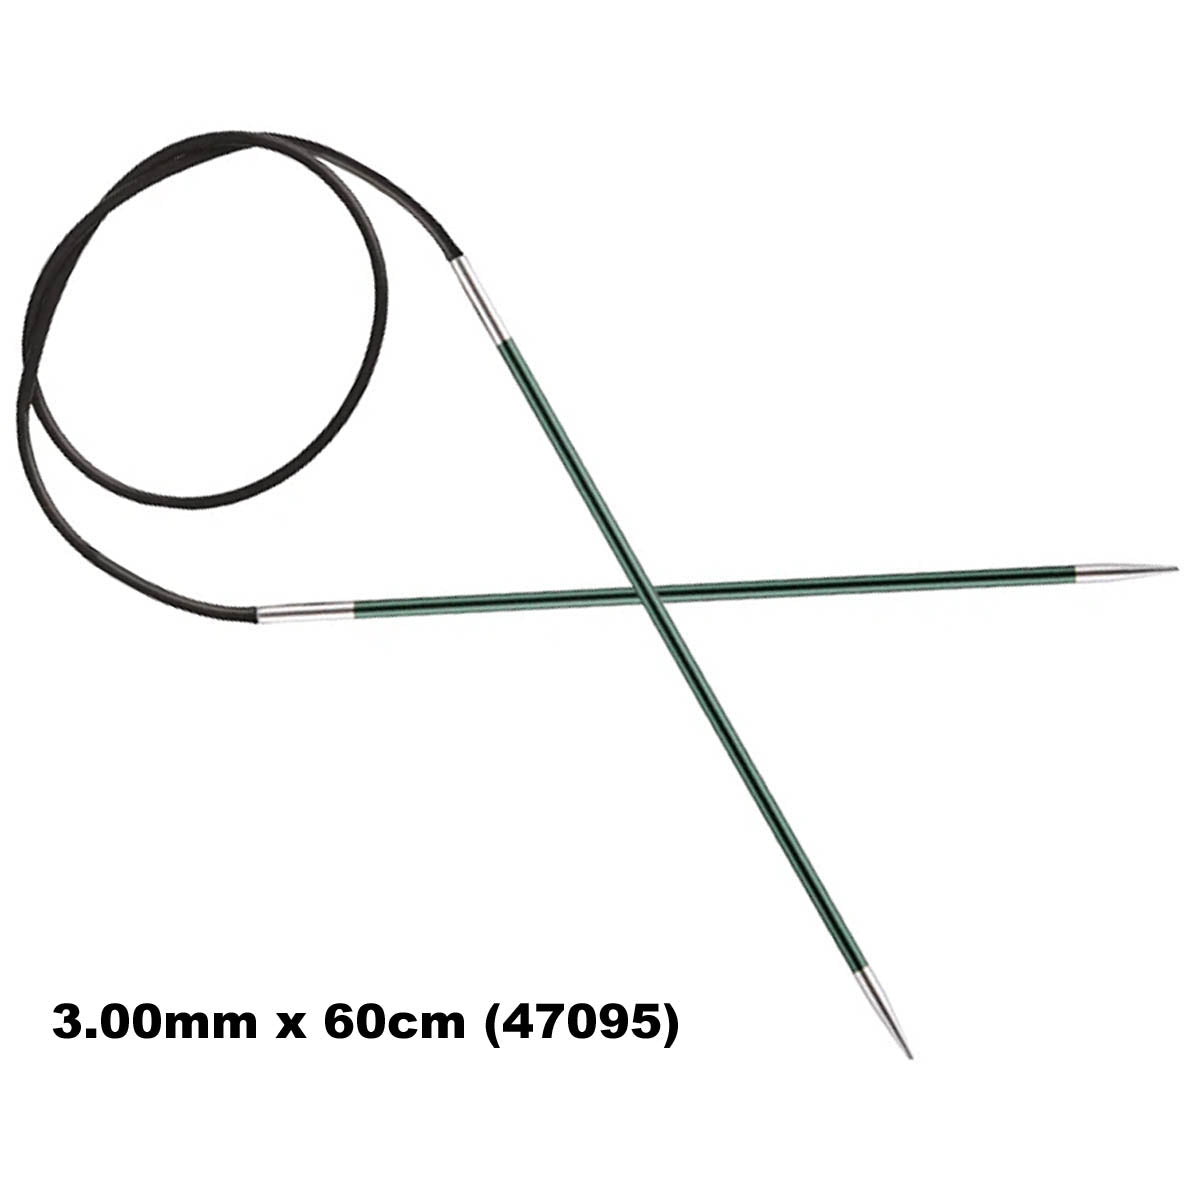 KnitPro ZING - FIXED CABLE CIRCULAR Knitting Needles - Choose Size